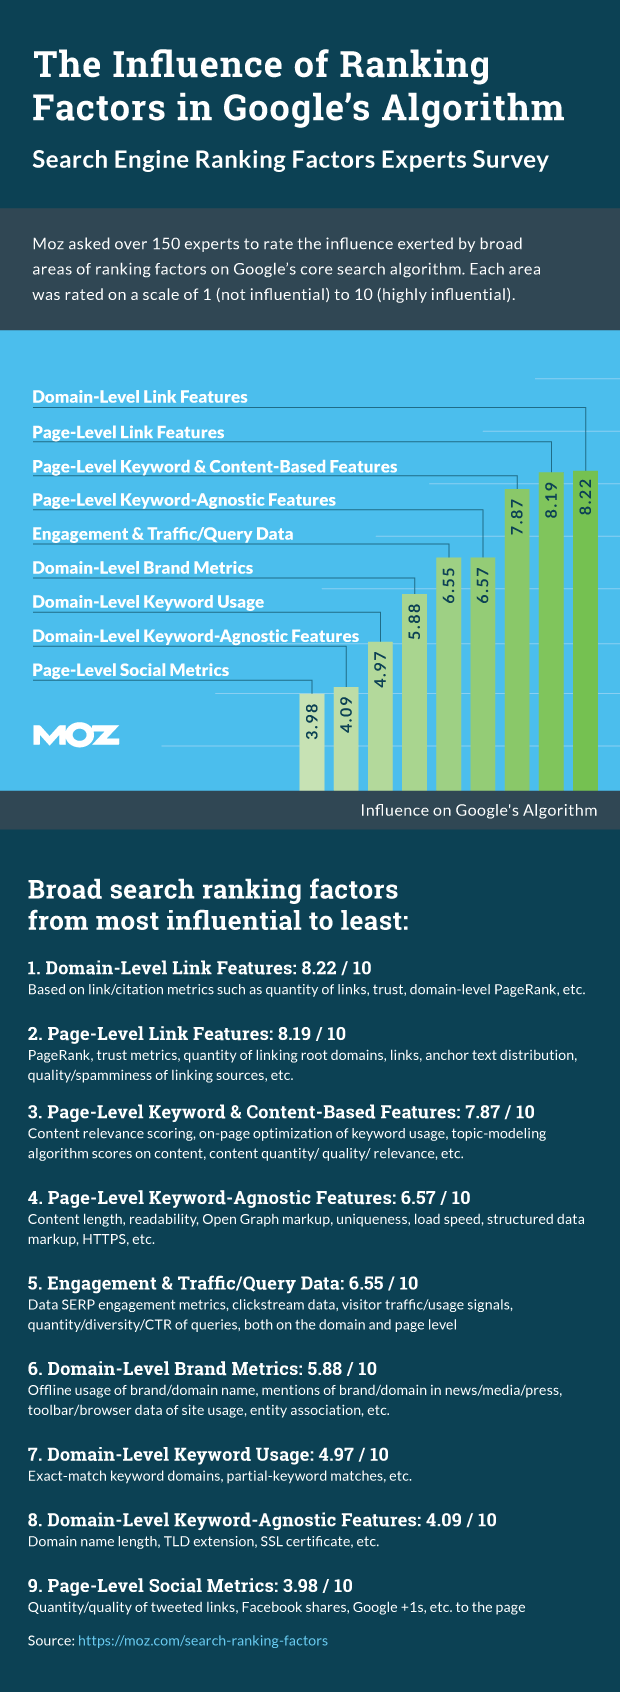 MOZ's Google Ranking Factors 2015